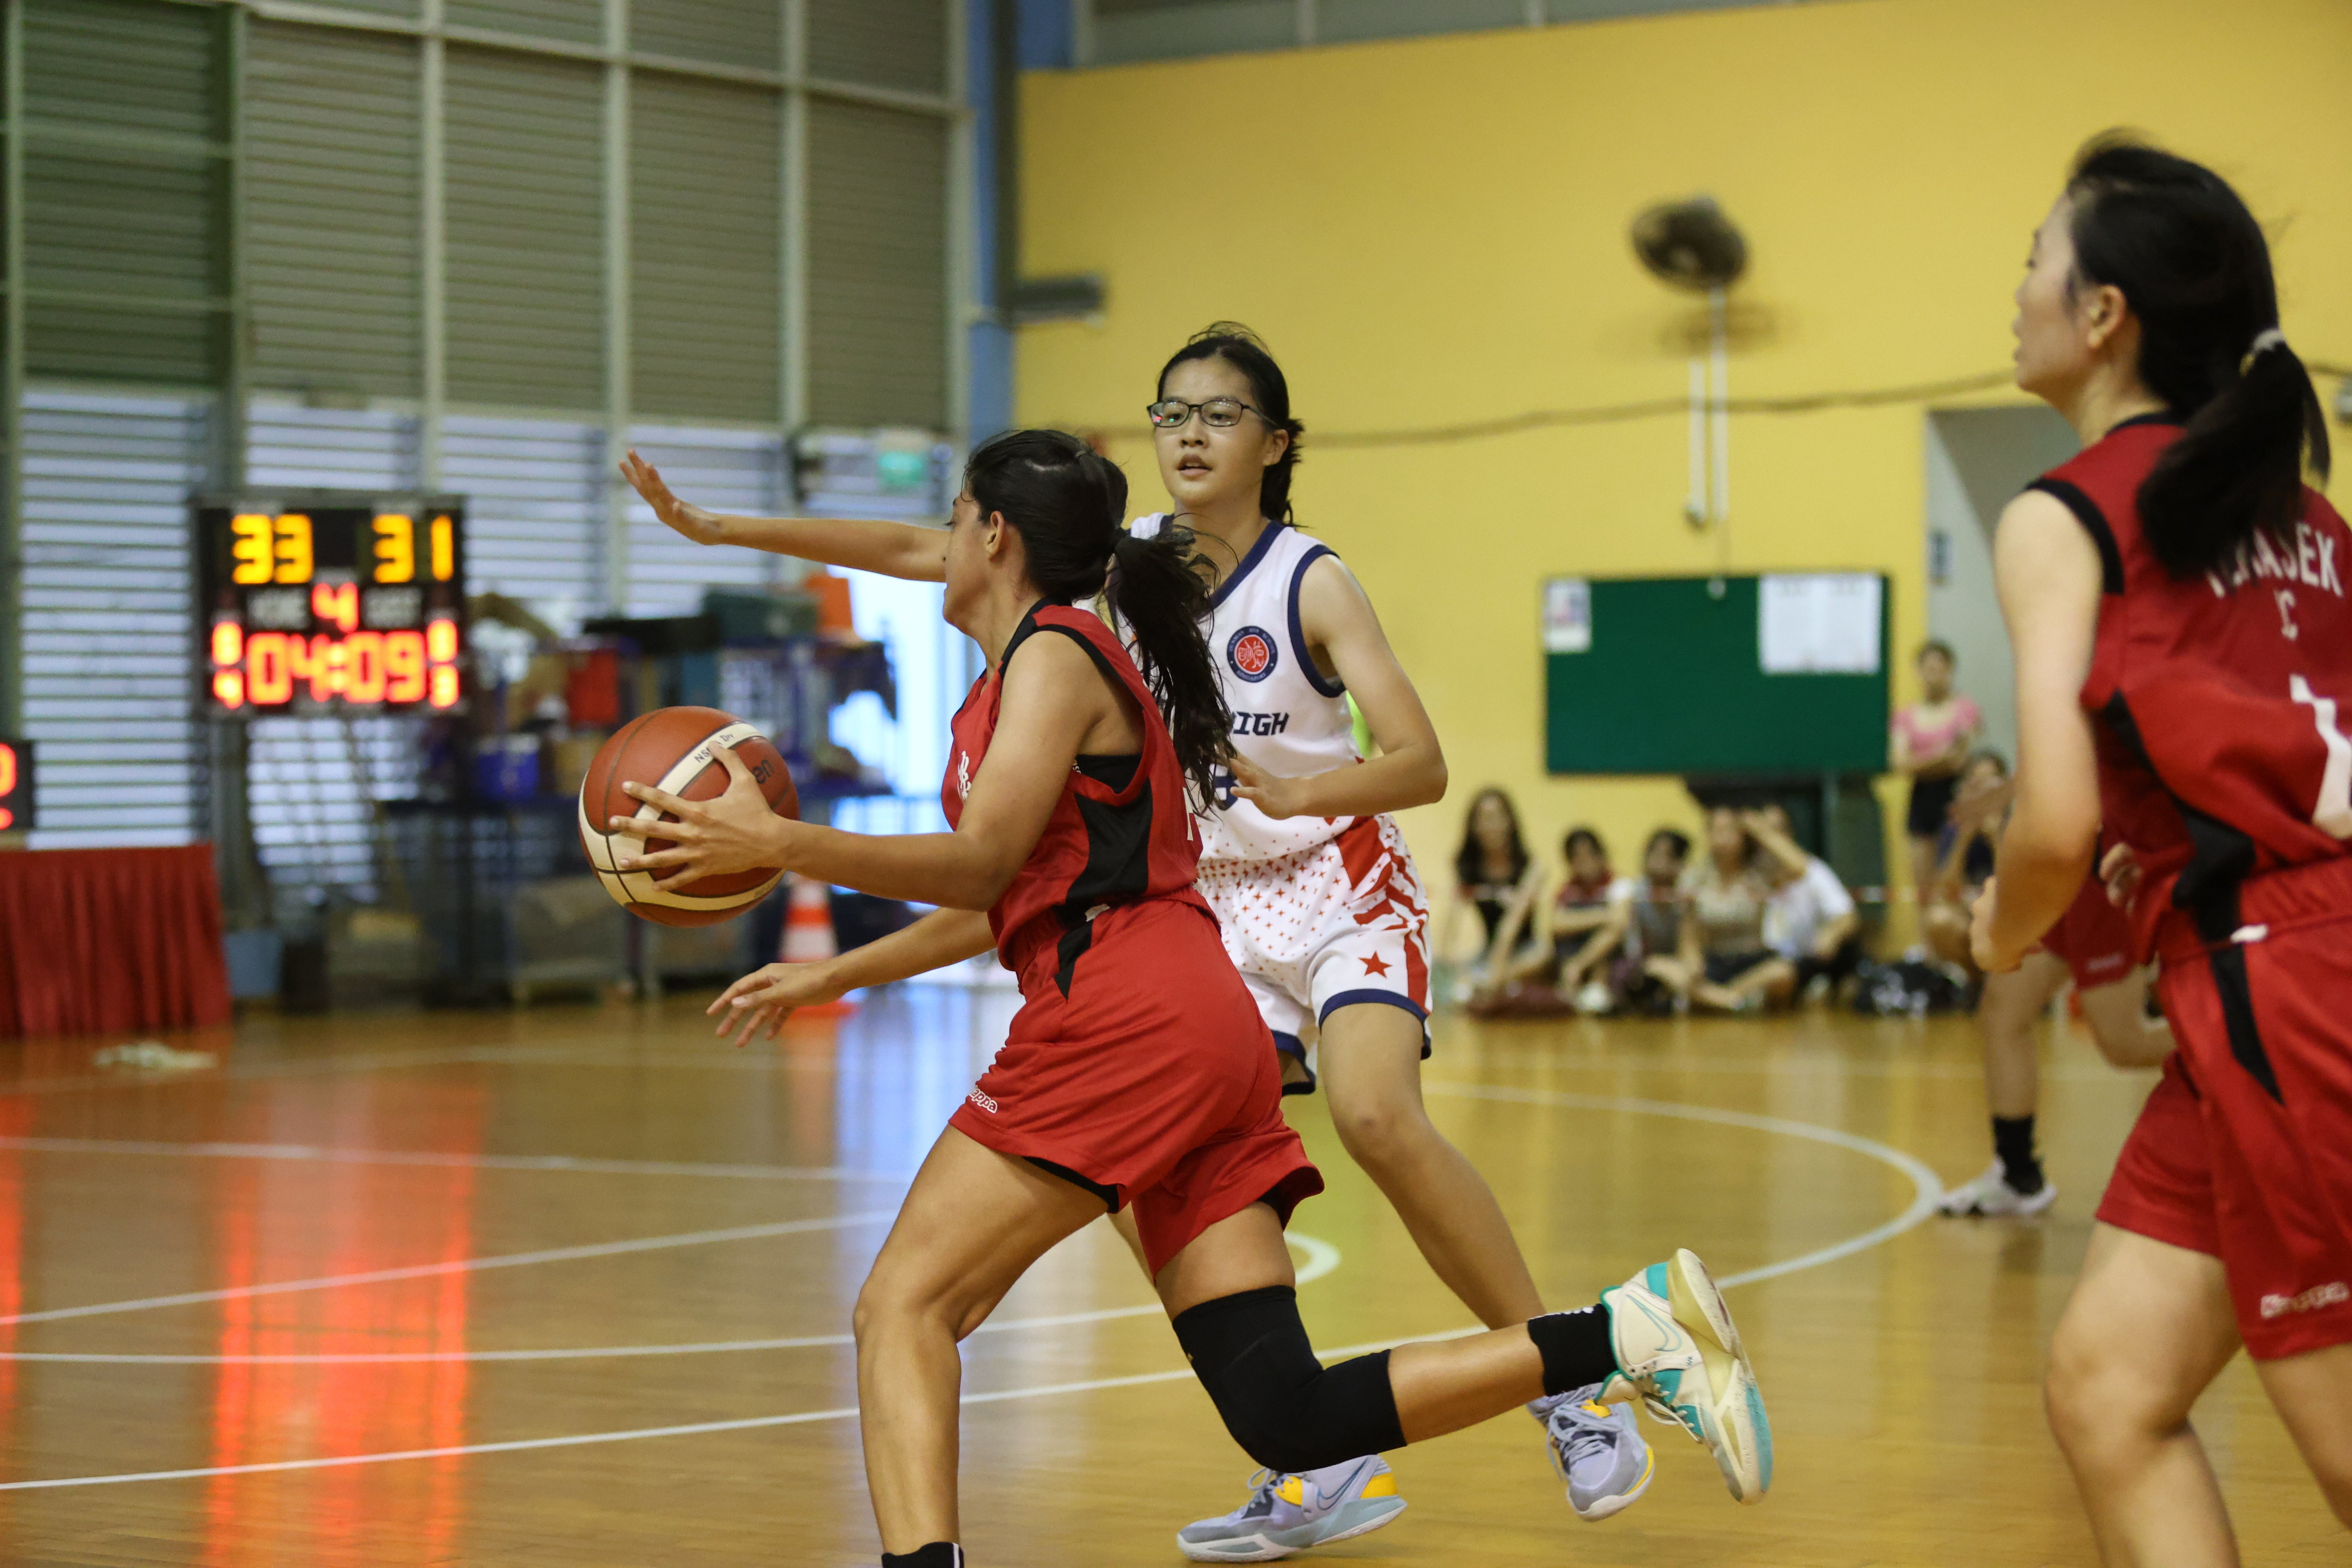 2023-04-28_NSG Basketball Div A Girls - DHS(White) vs TJC(Red)_Photo by Anbumani (16)